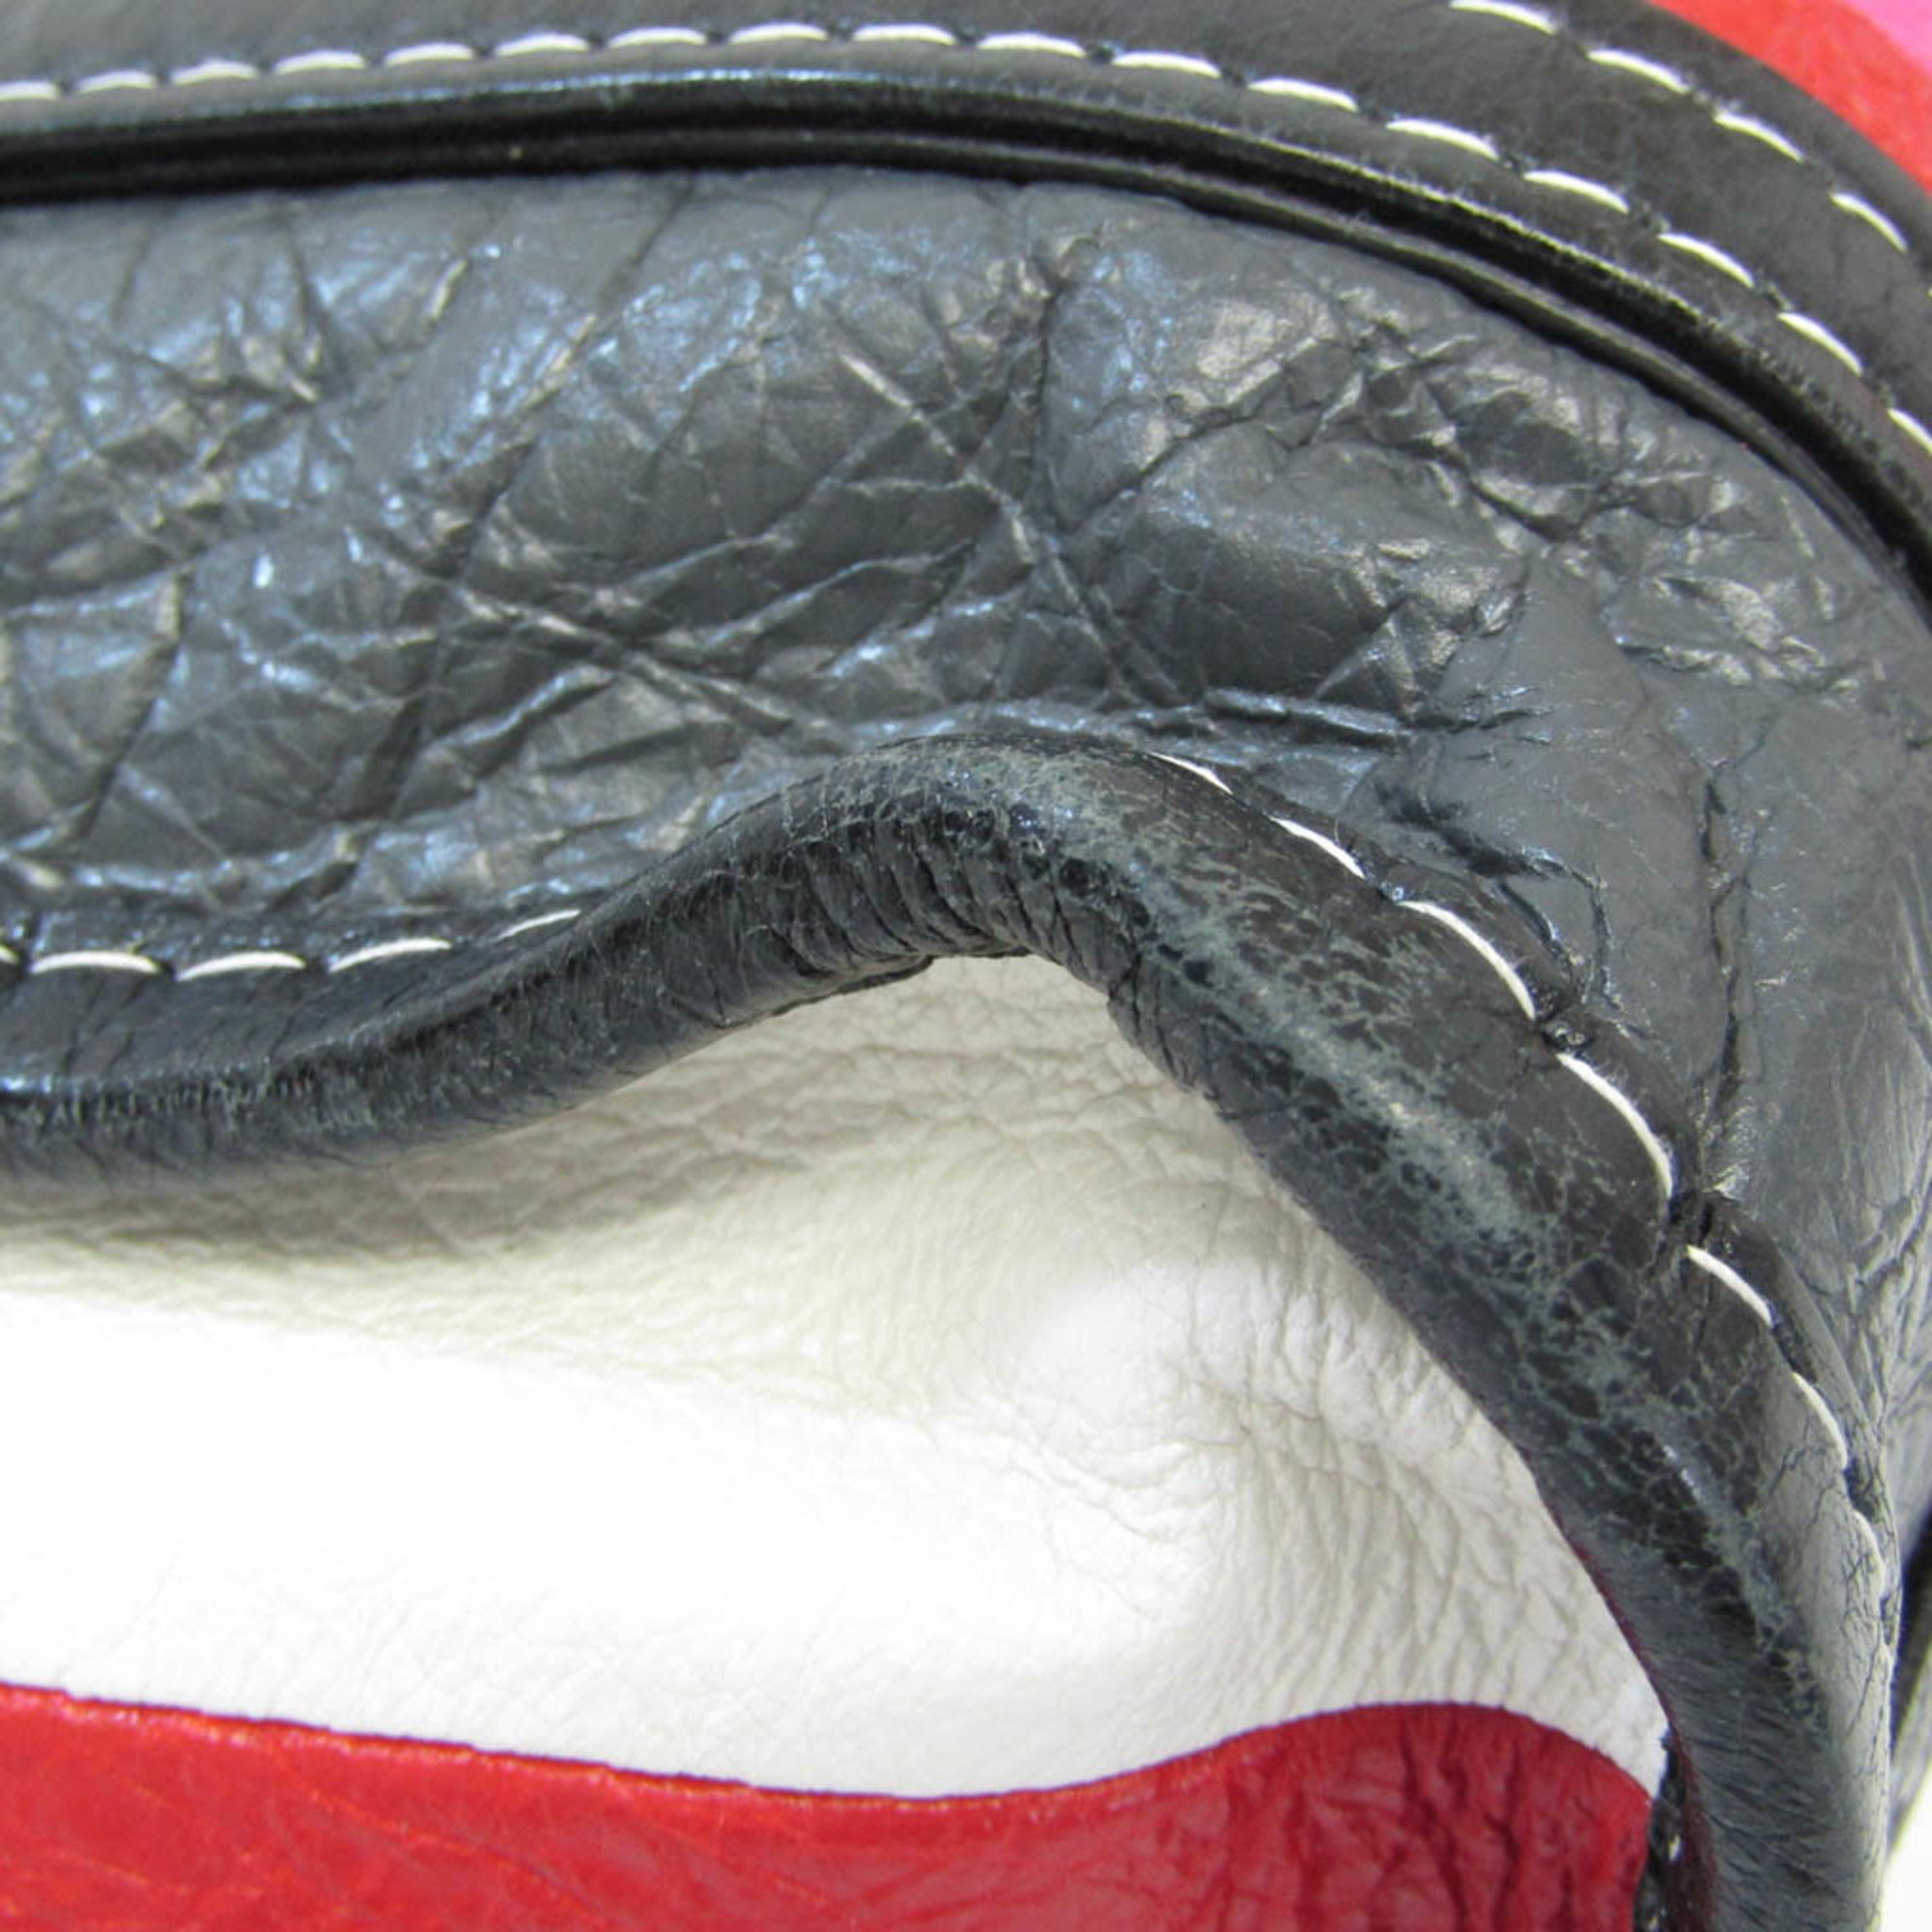 Balenciaga Bazar Shopper XS 452458 Women's Leather Shoulder Bag,Tote Bag Black,Gray,Pink,Red Color,White